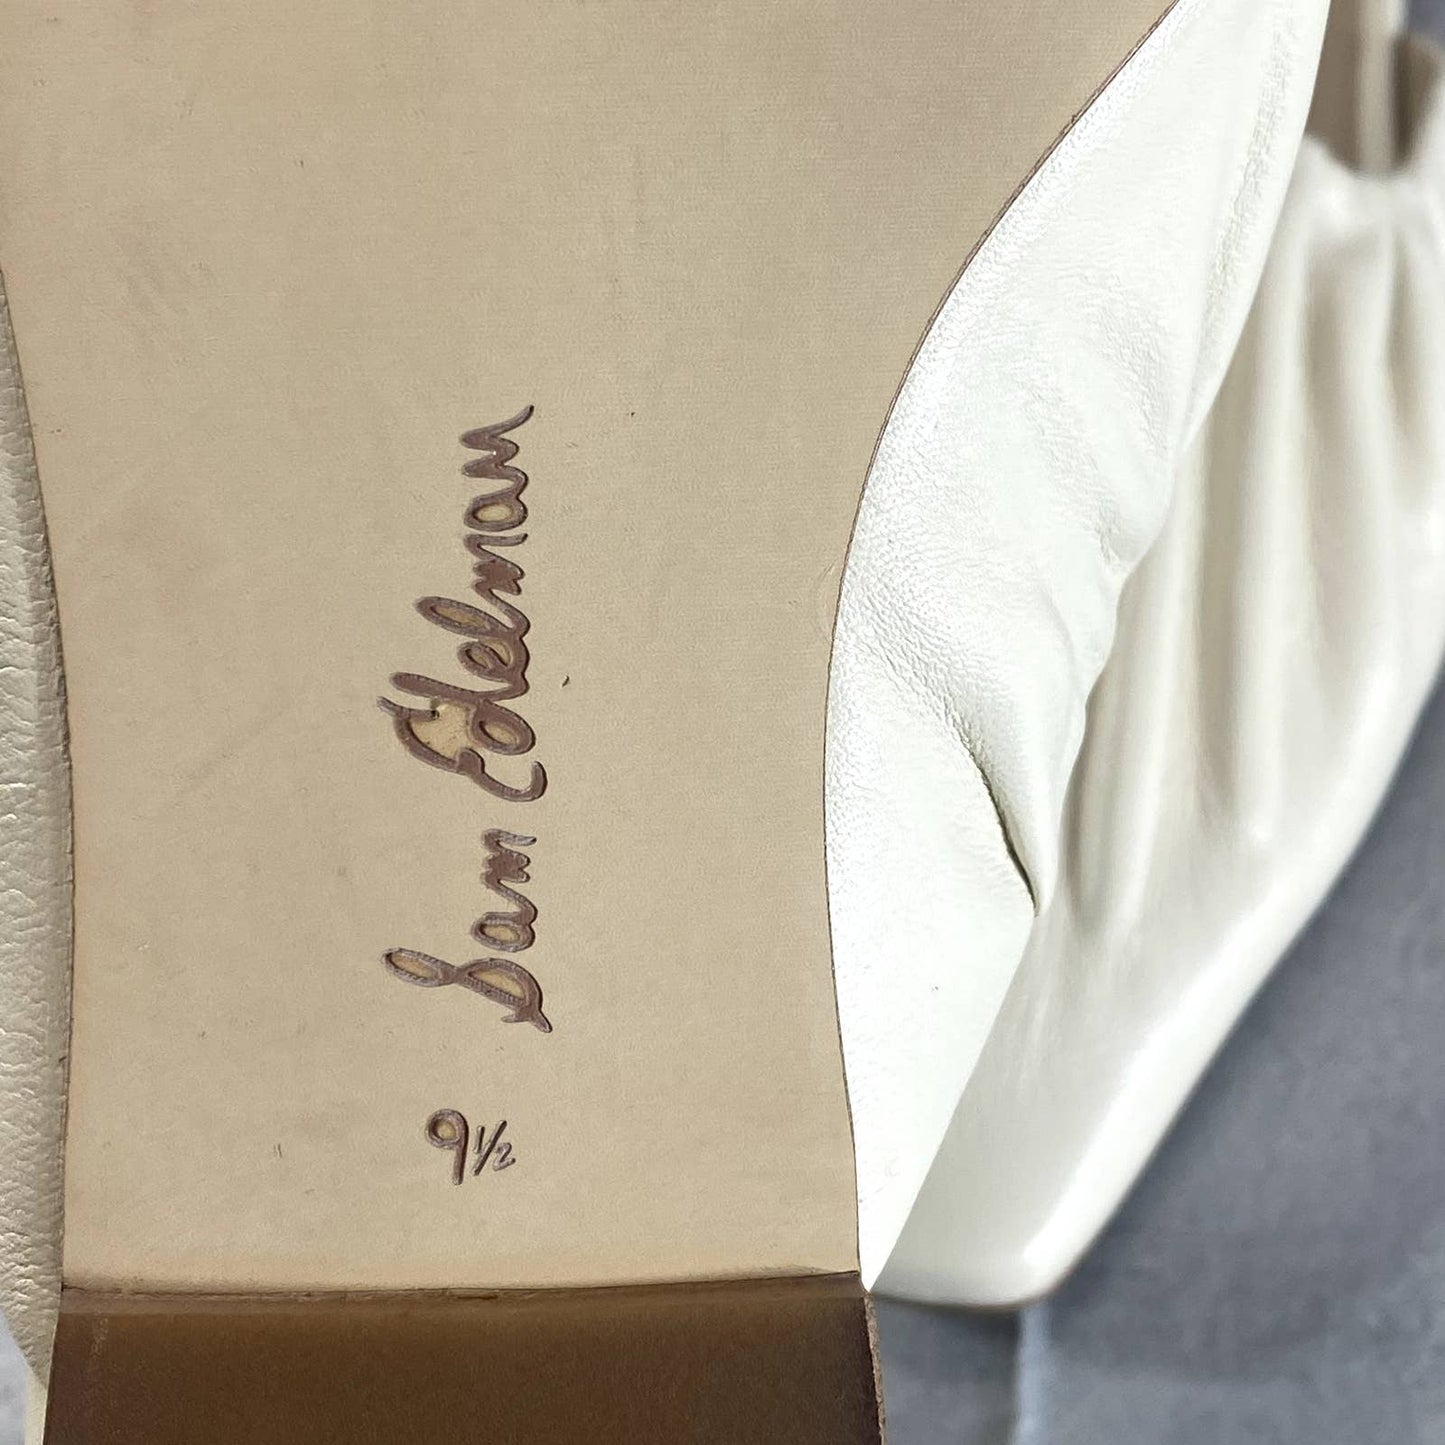 SAM EDELMAN Women's Ivory Leather Cecilia Almond-Toe Slip-On Mule Sandals SZ 9.5